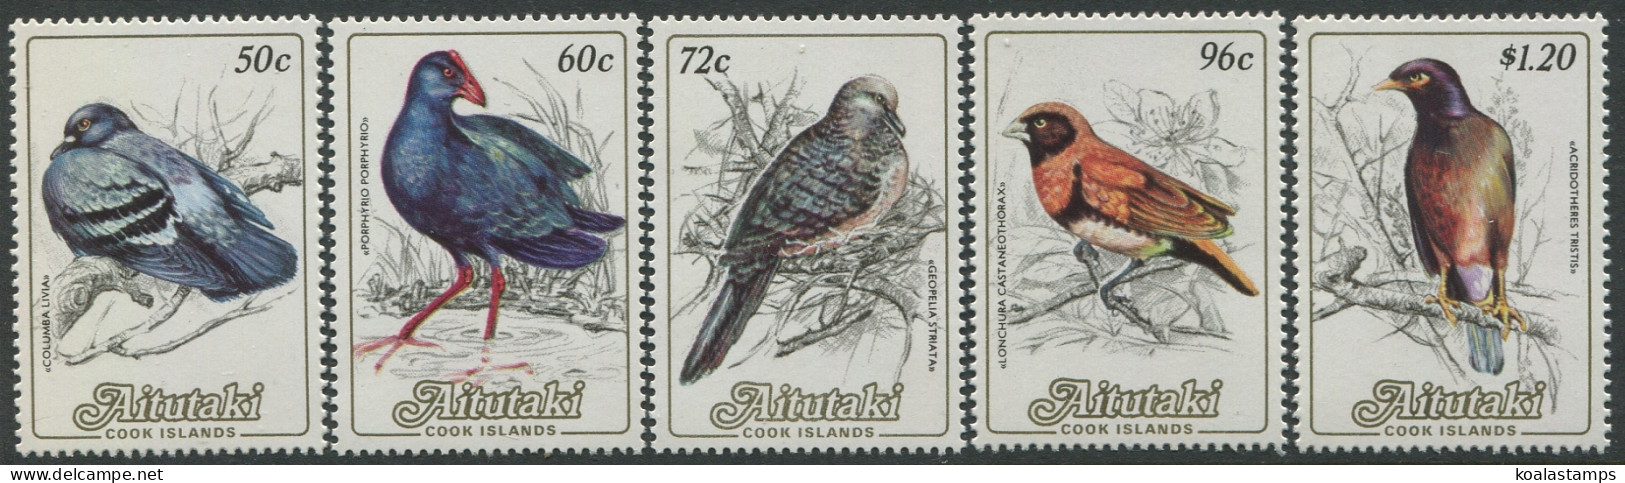 Aitutaki 1984 SG485-489 Birds (5) MNH - Cook Islands